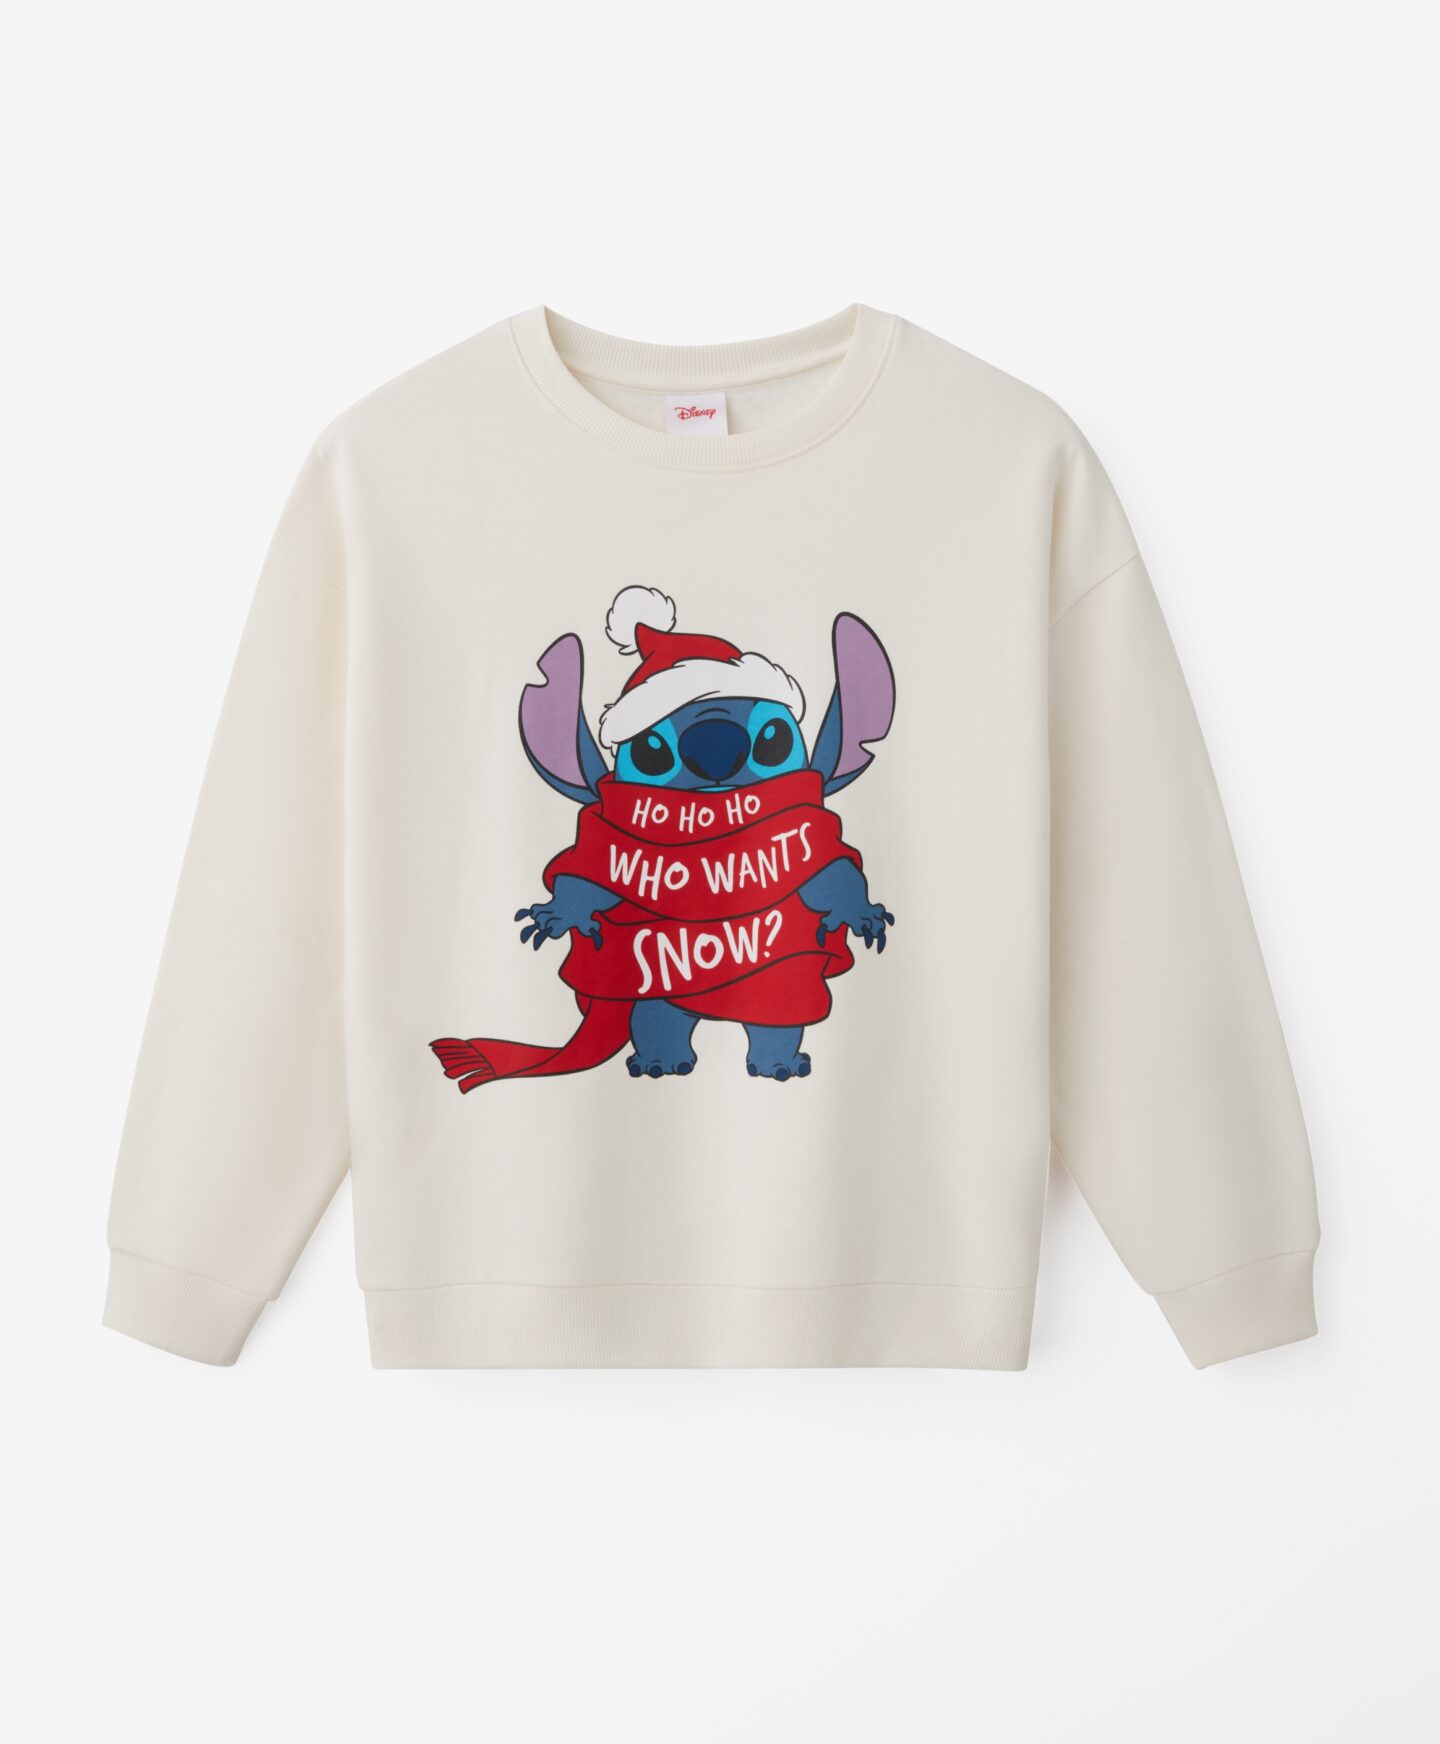 Oversize φούτερ για κορίτσια με άδεια χρήσης Disney Stitch Christmas, χρώμα κρεμ, 134-170